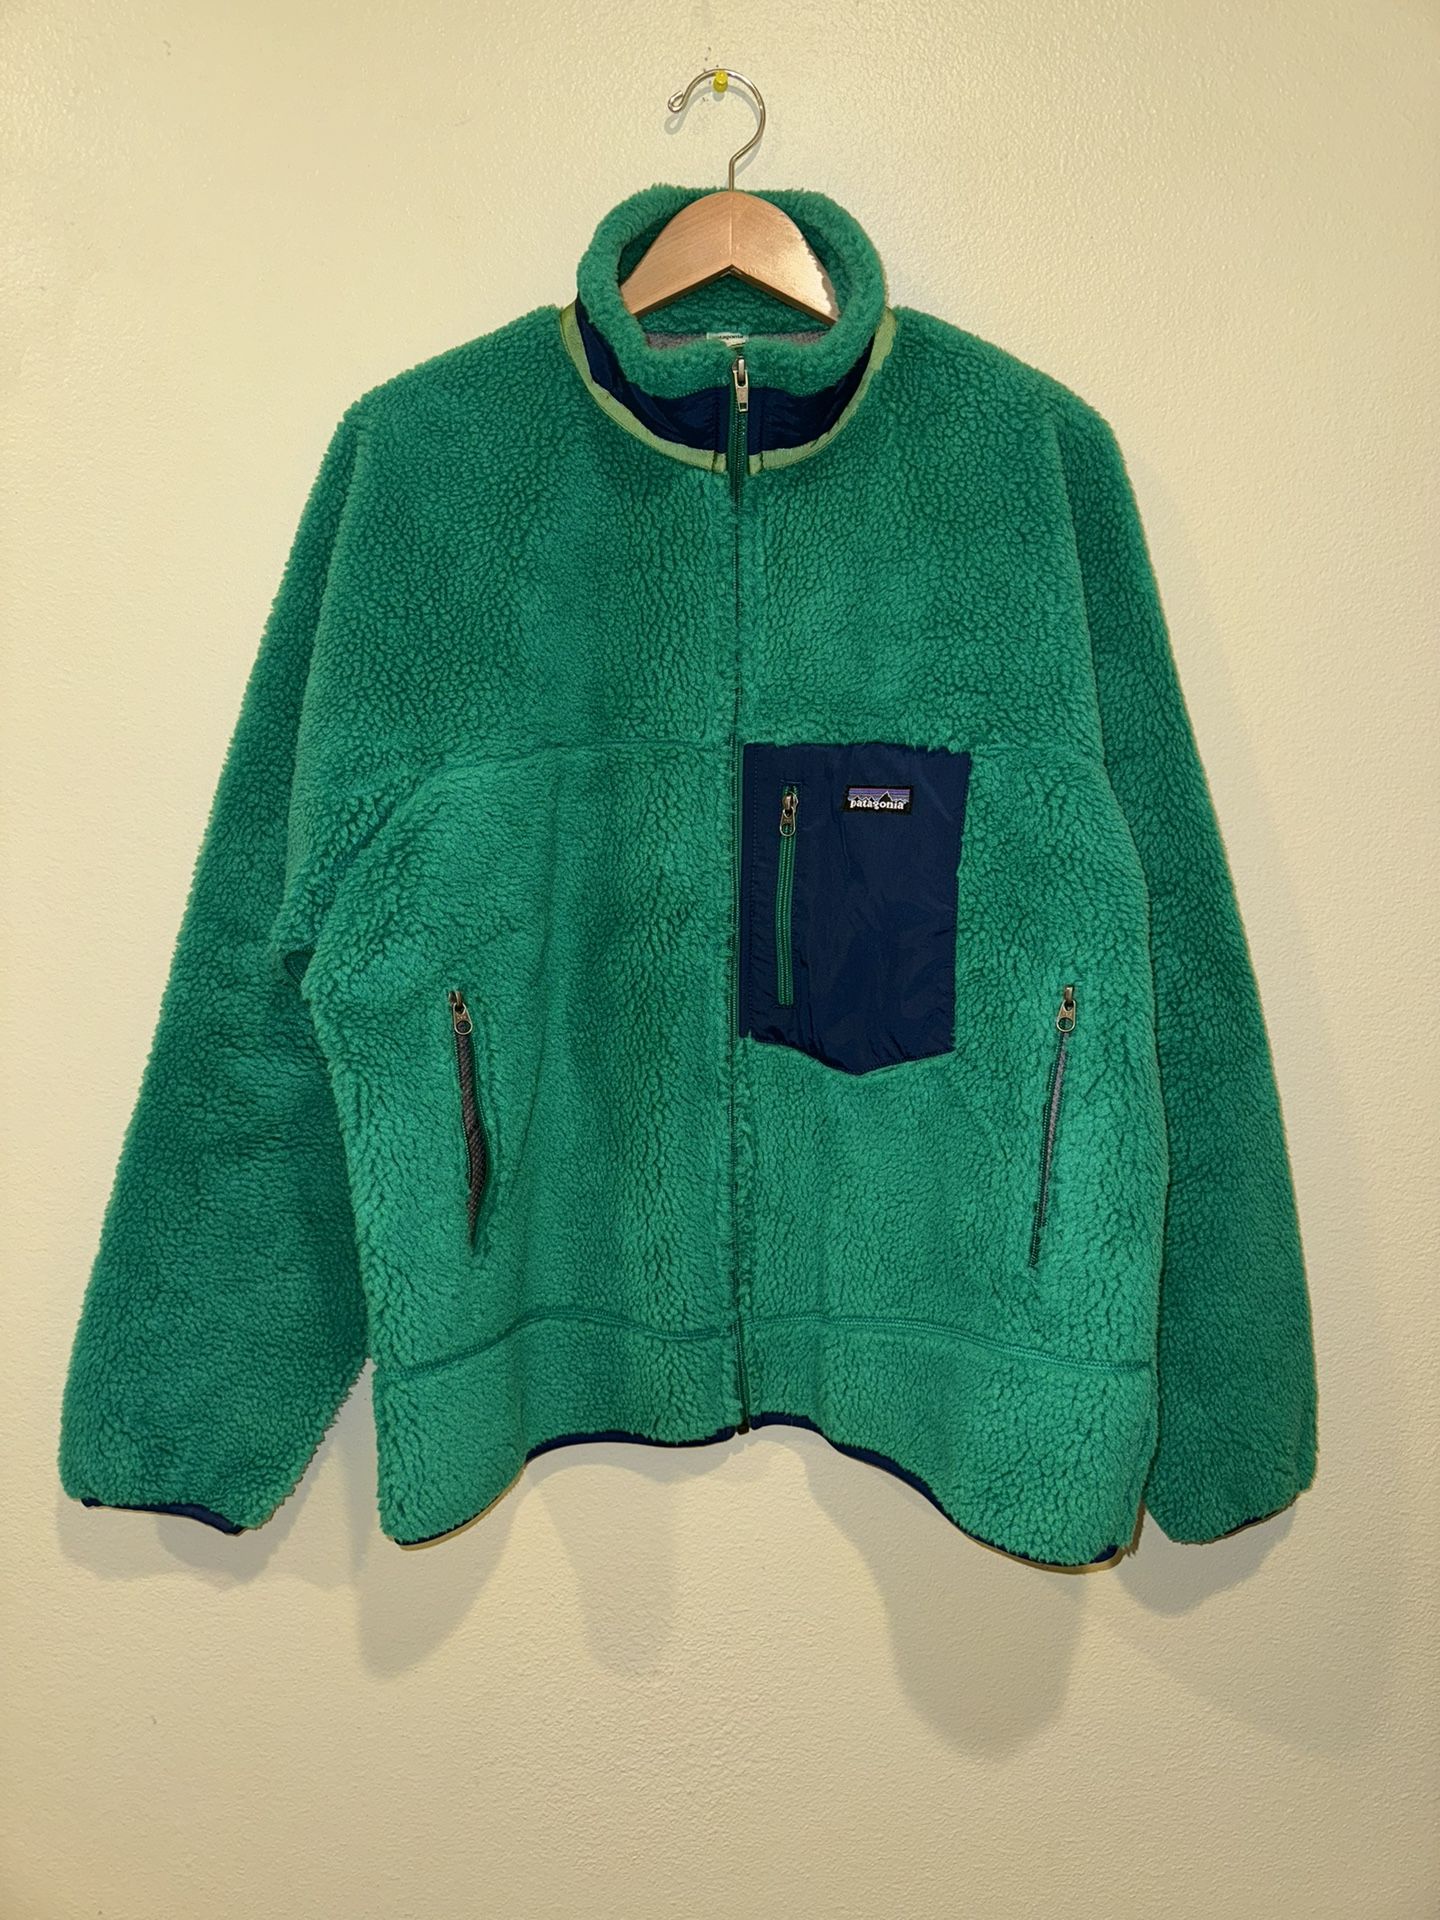 Patagonia Classic Retro X Sherpa Fleece Jacket Green 2011 Men’s Size L Large